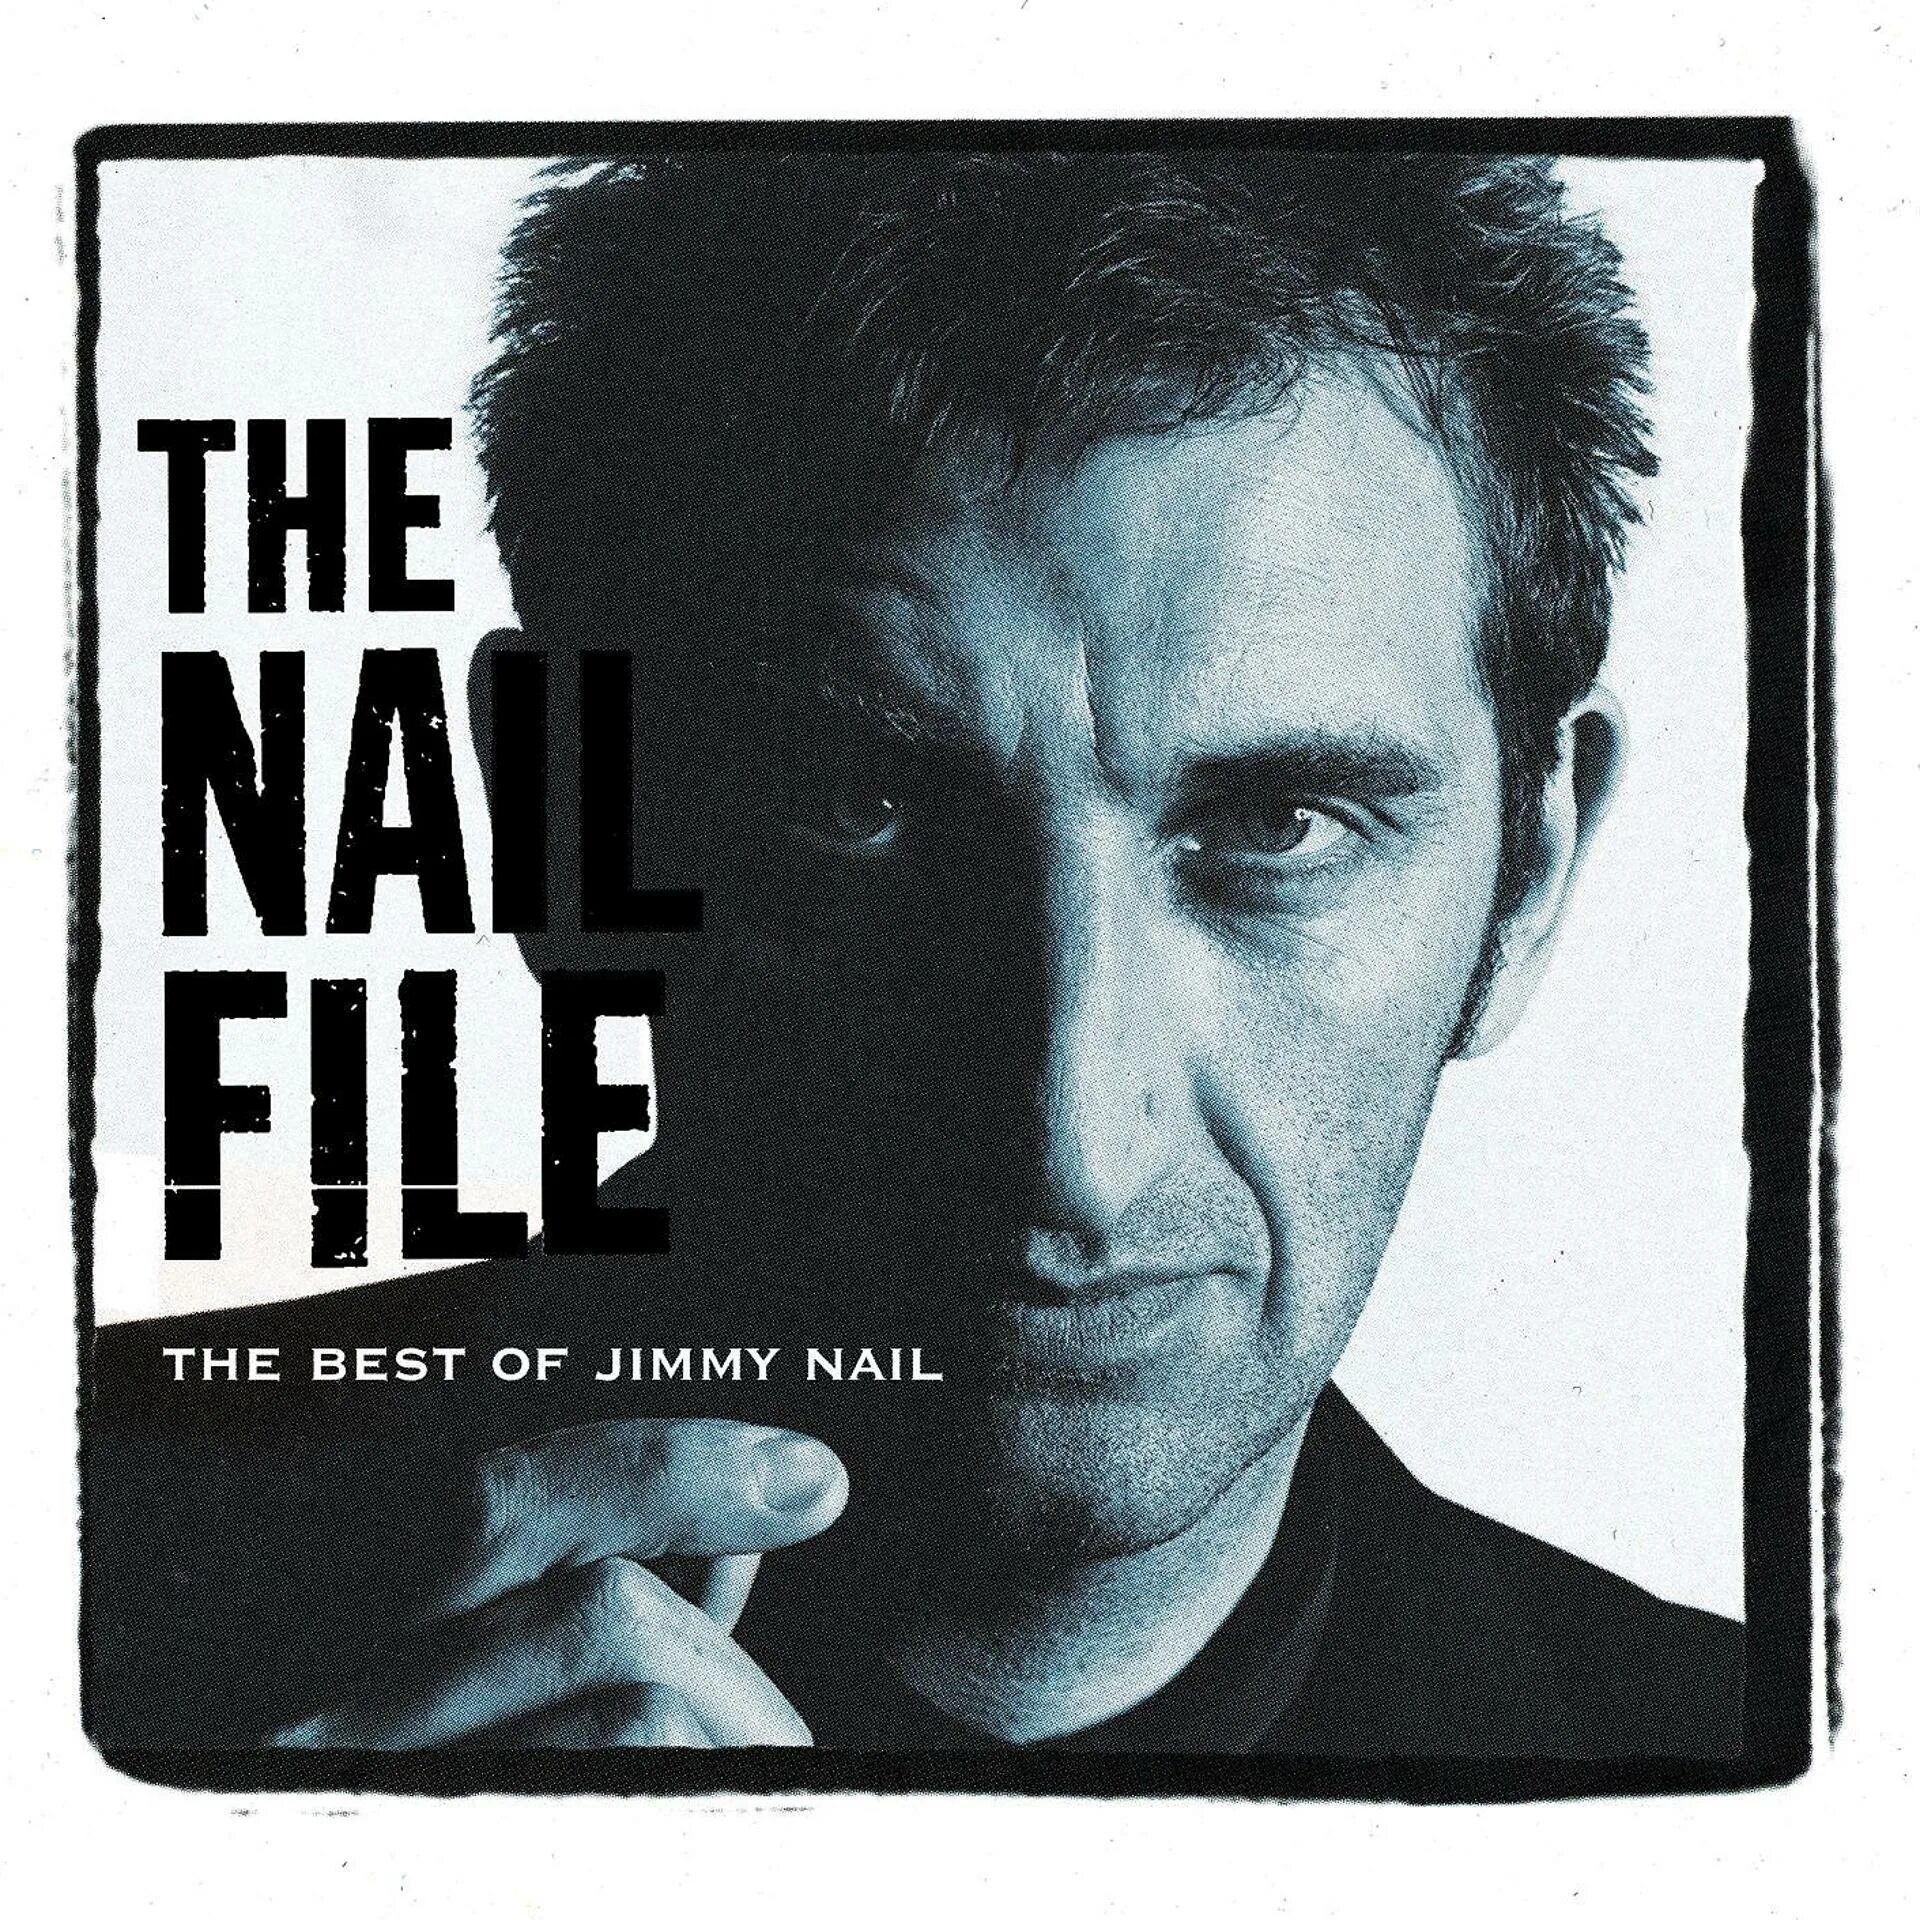 Слушать нейл. Джимми нейл. Jimmy Nail музыкант. Джимми нейл aint no doubt. Jimmy Nail -1997 - the Nail file - the best of Jimmy Nail, фото.